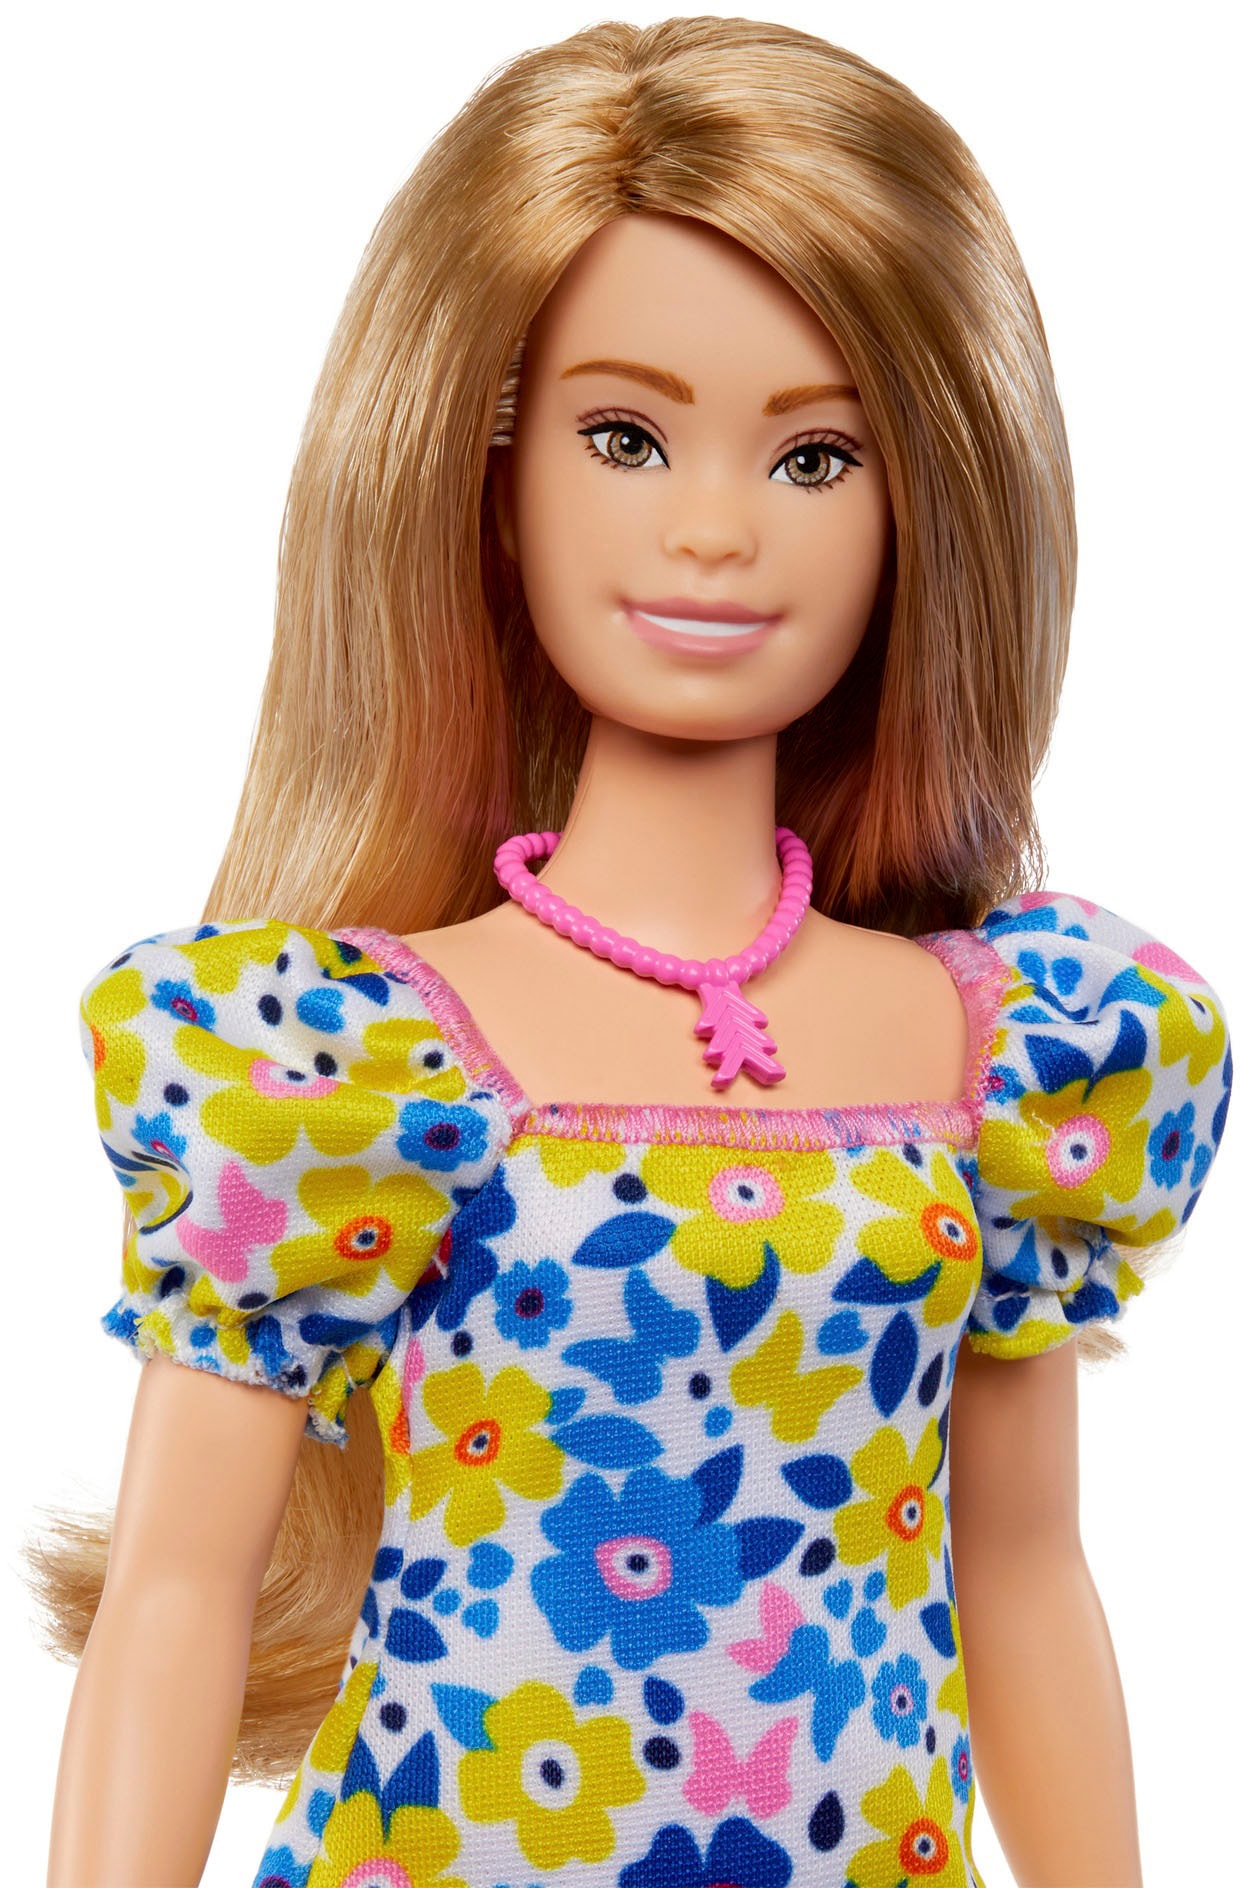 Barbie Anziehpuppe »Fashionistas, Down-Syndrom«